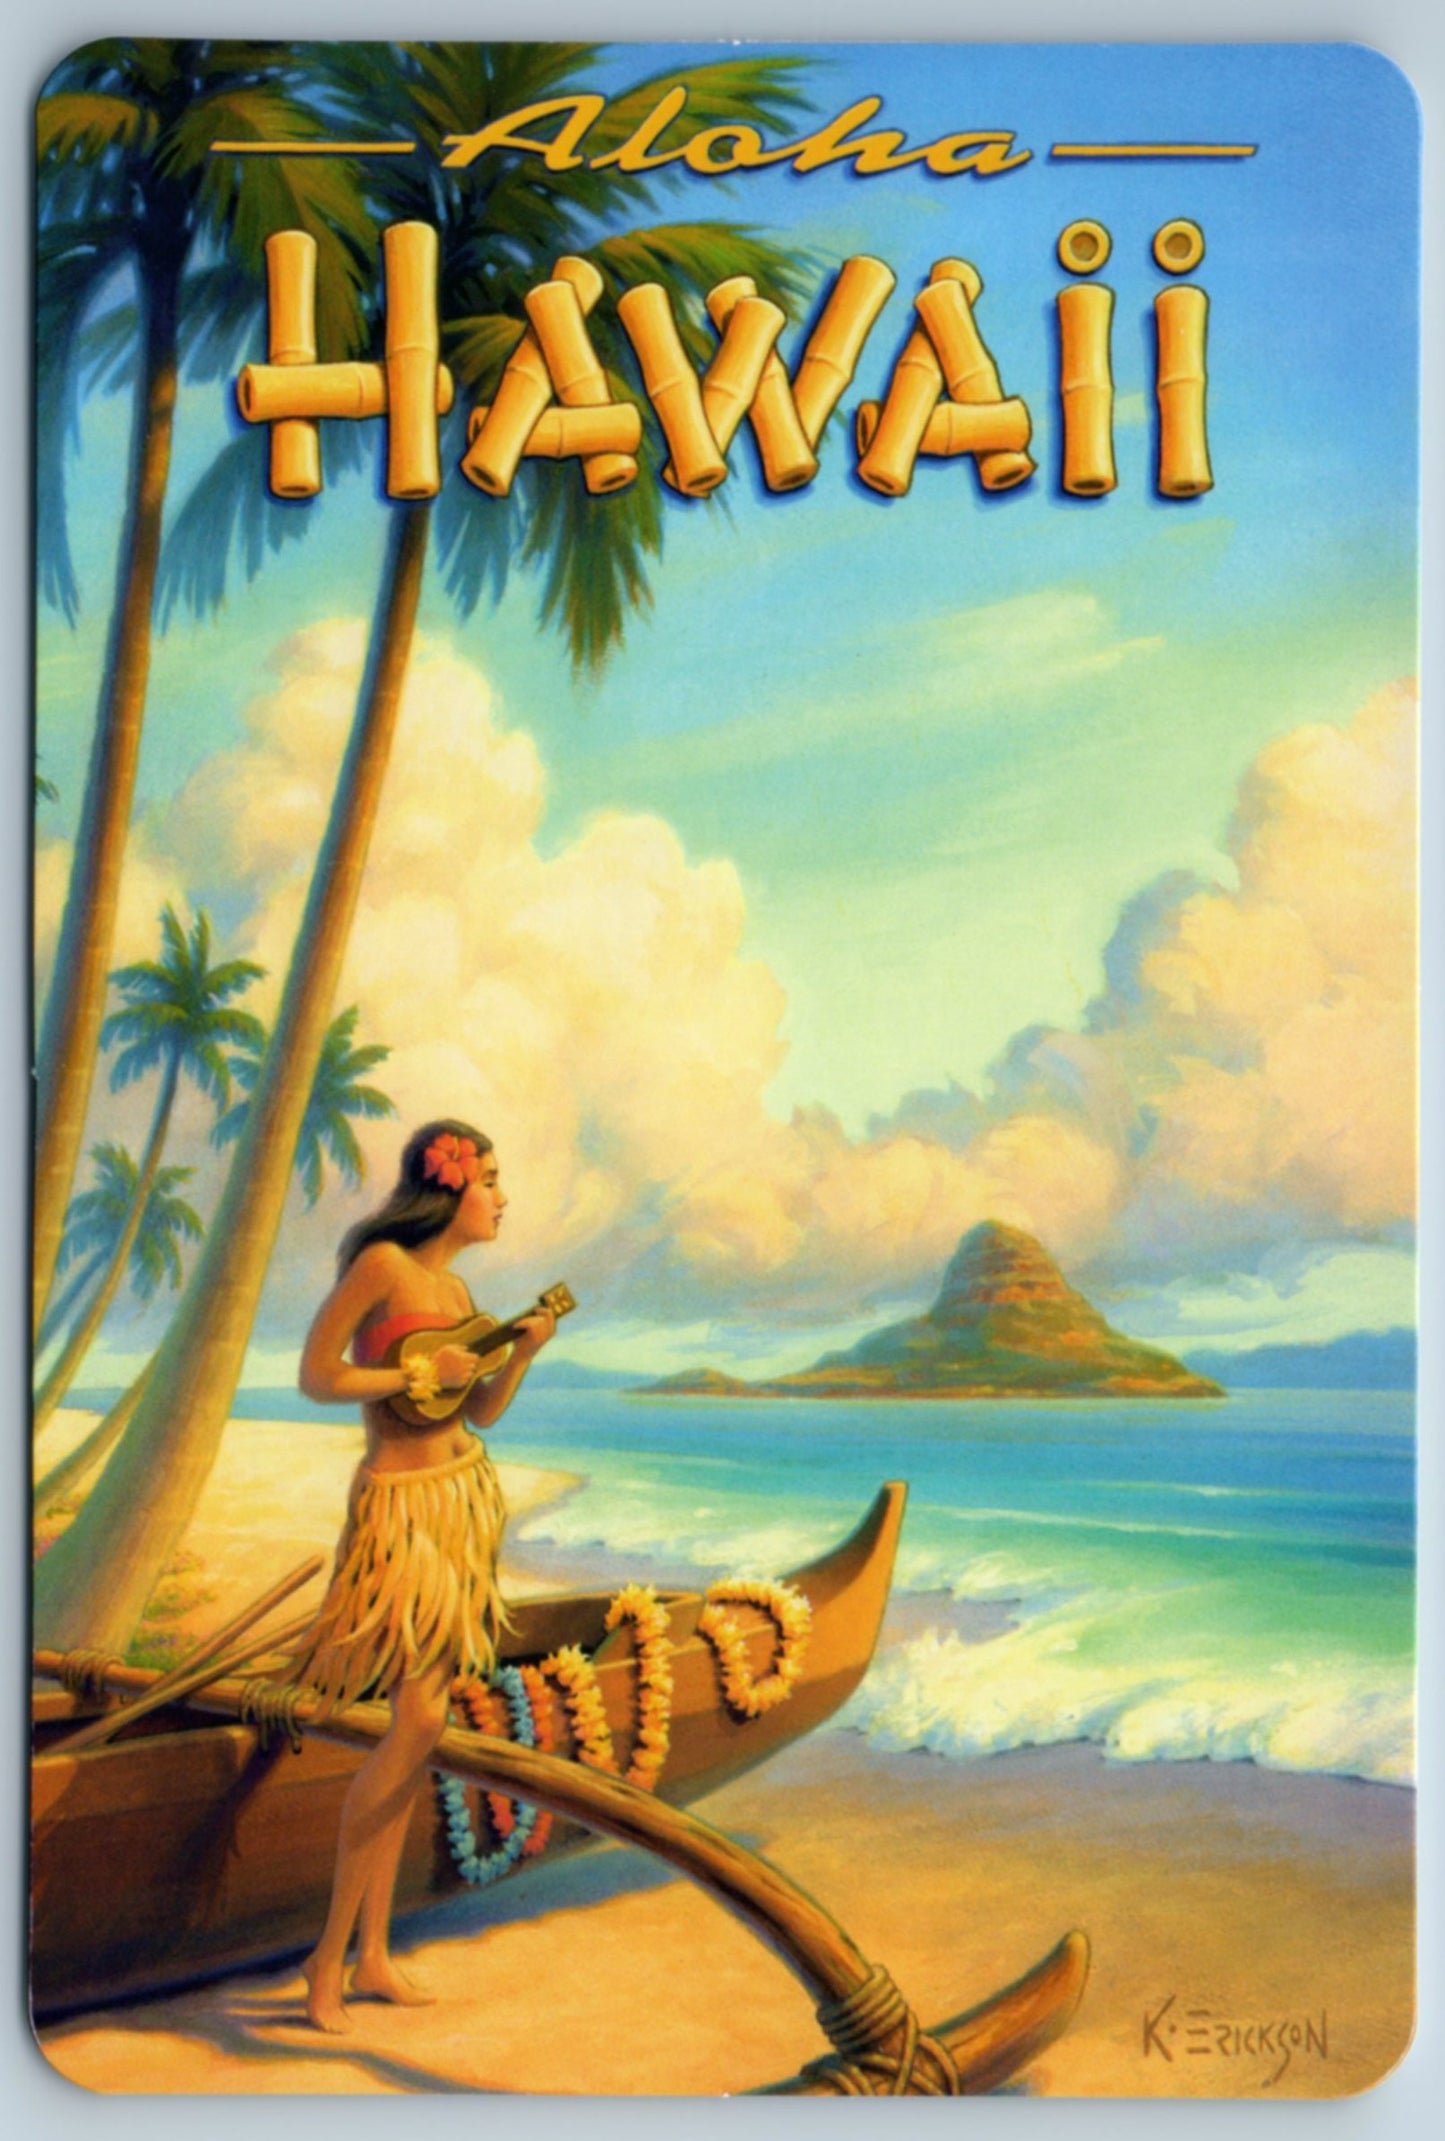 Aloha Hawaii - Collection Vol. 2 - By Kerne Erickson - Box Set of 10 Hawaii Postcards